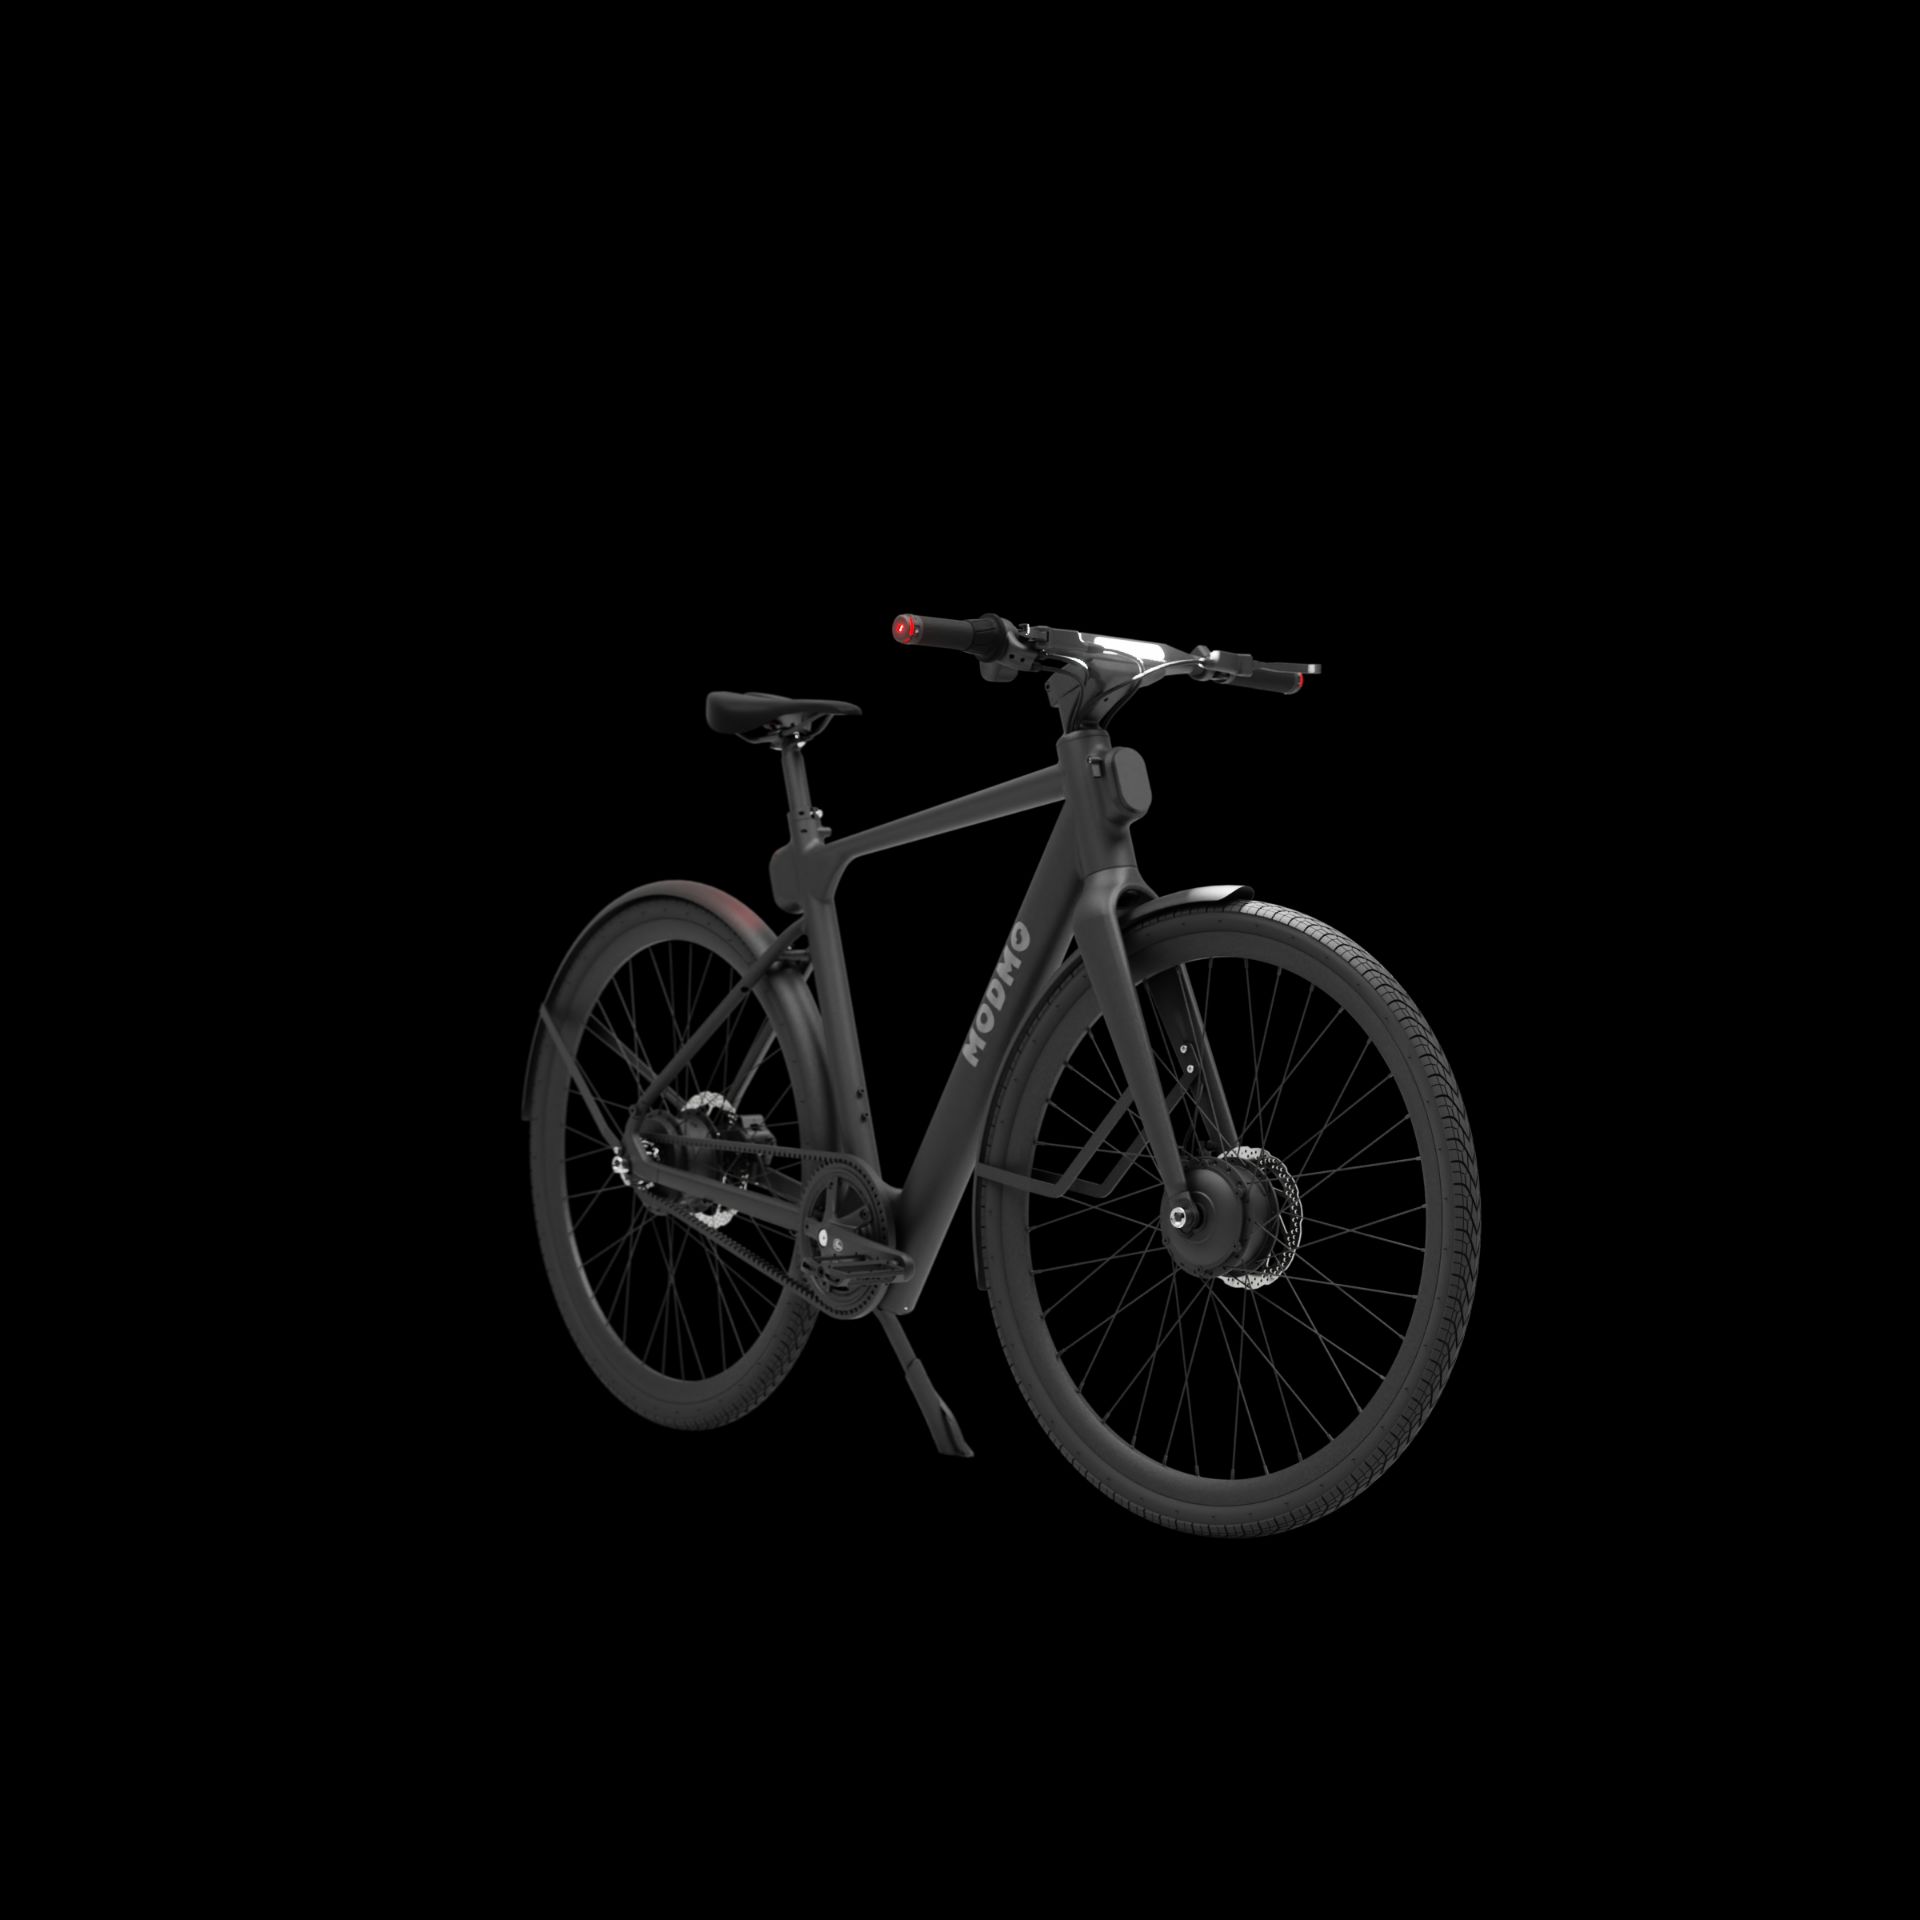 Modmo Saigon+ Electric Bicycle - RRP £2800 - Size L (Rider 175-190cm) - Image 9 of 15